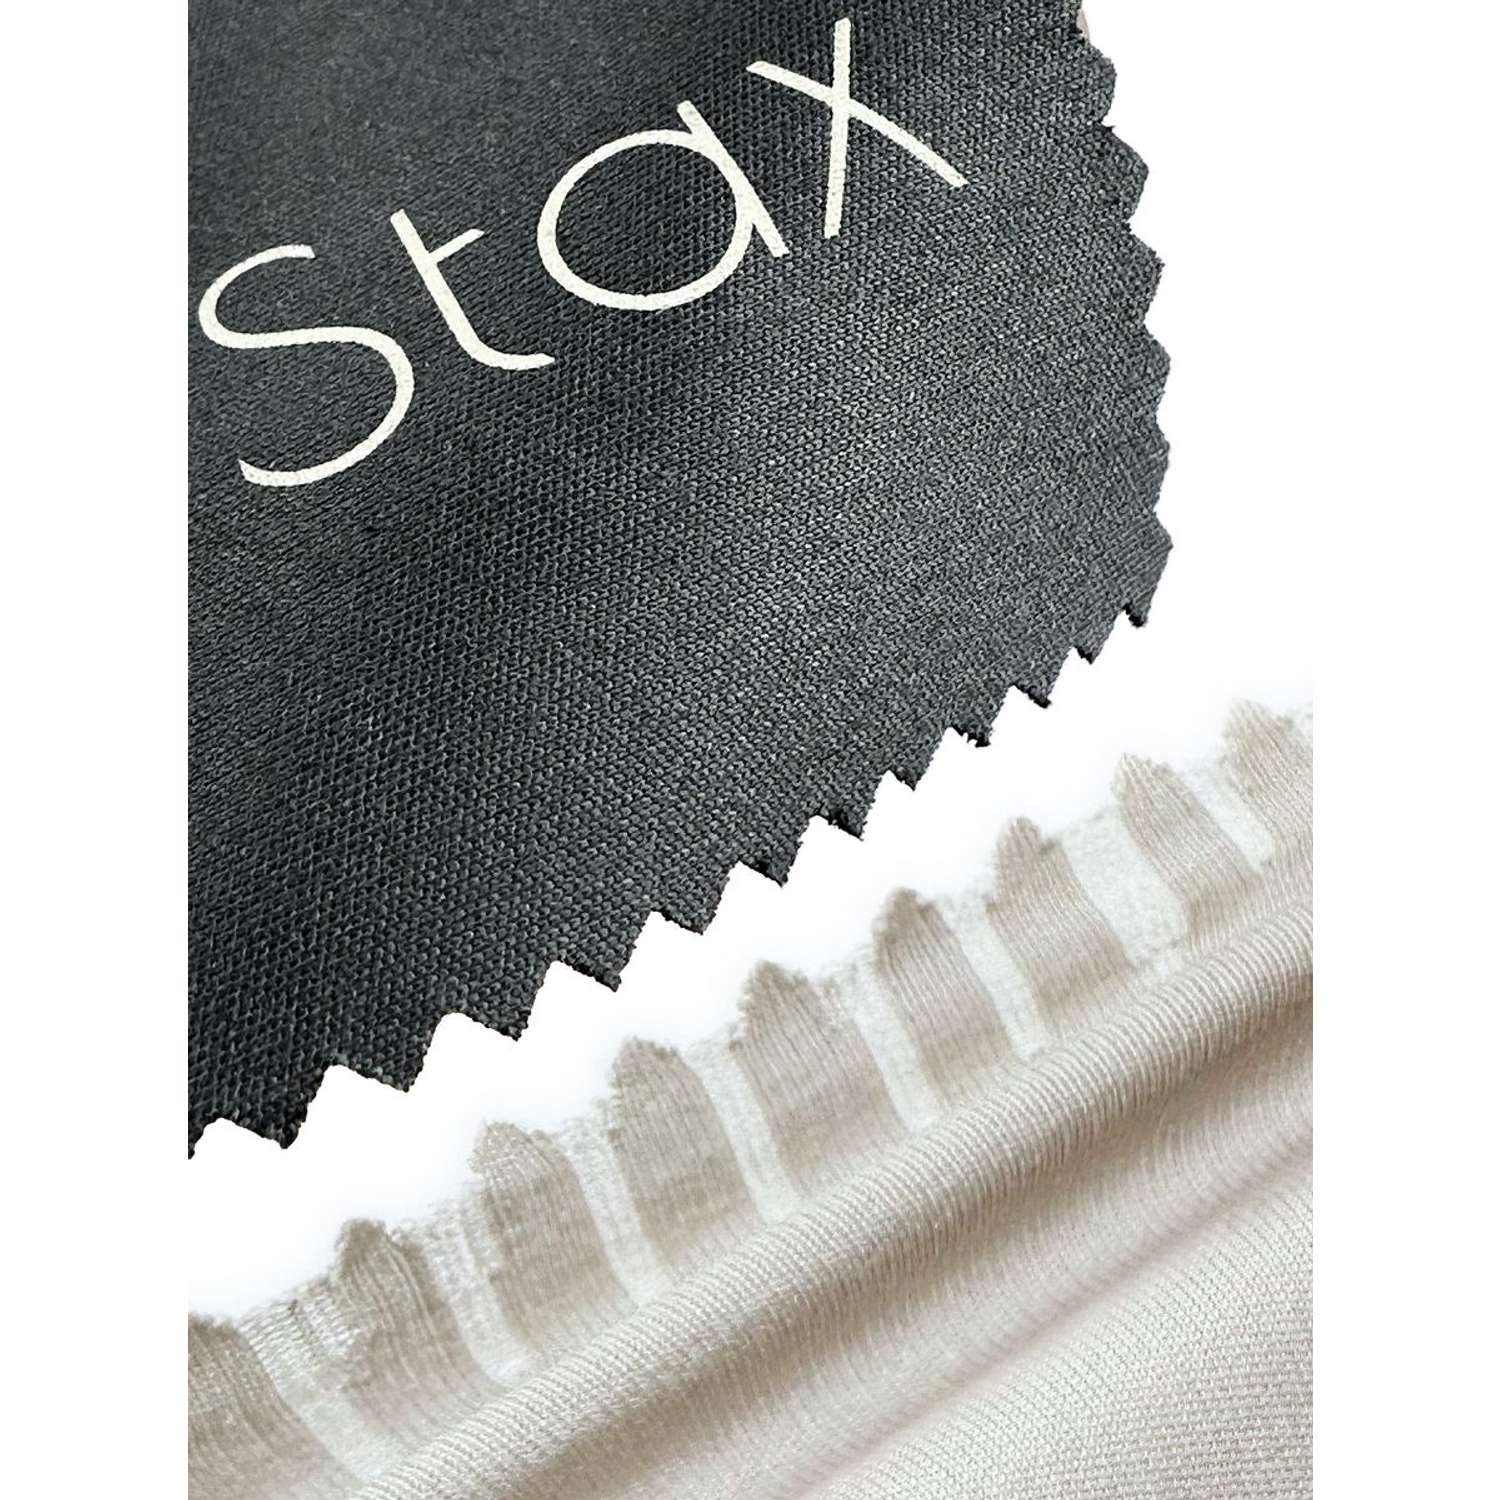 Спрей и салфетка для очков Stax нп-о - фото 10